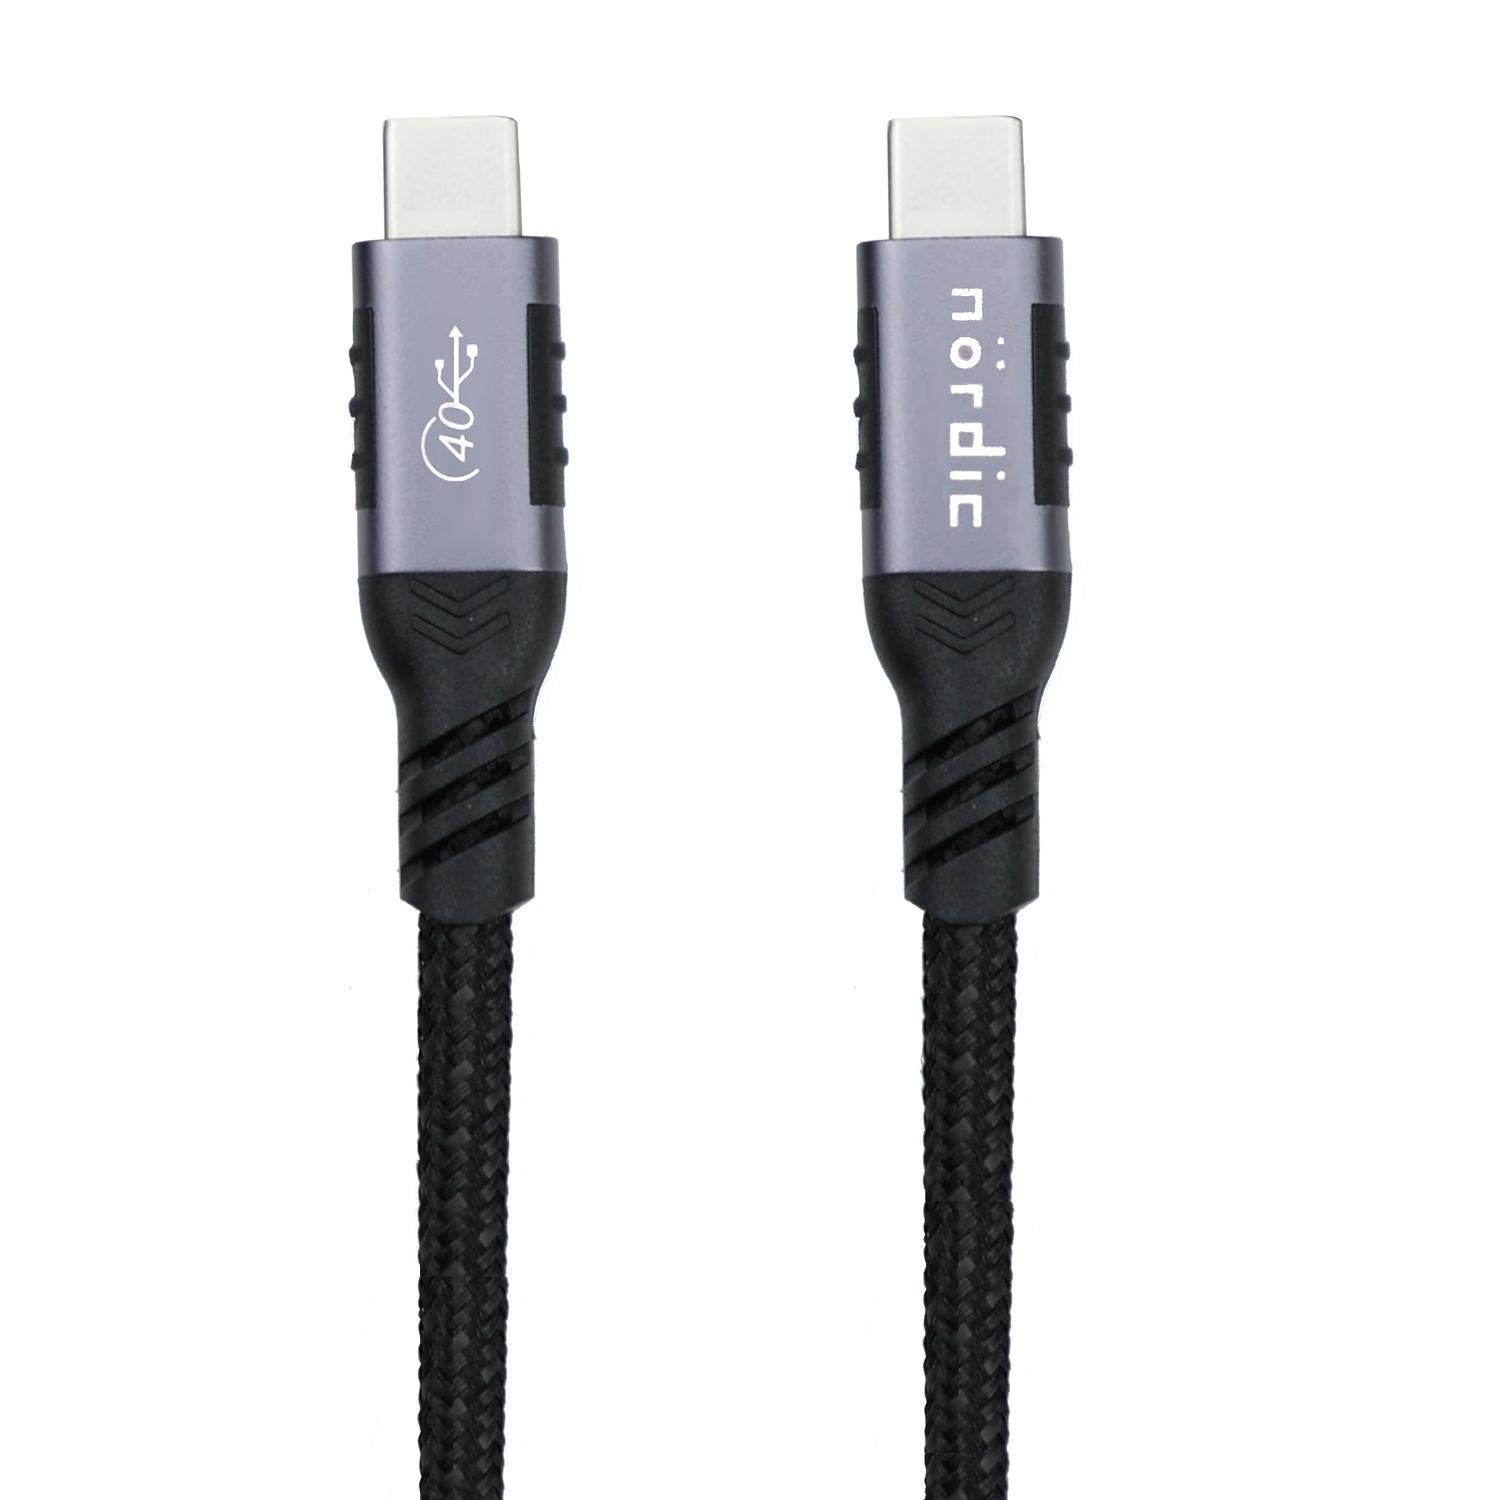 NÖRDIC USB4-kabel 2,5 m 40 Gbps data 8K video PD 100W kompatibel med Thunderbolt 3